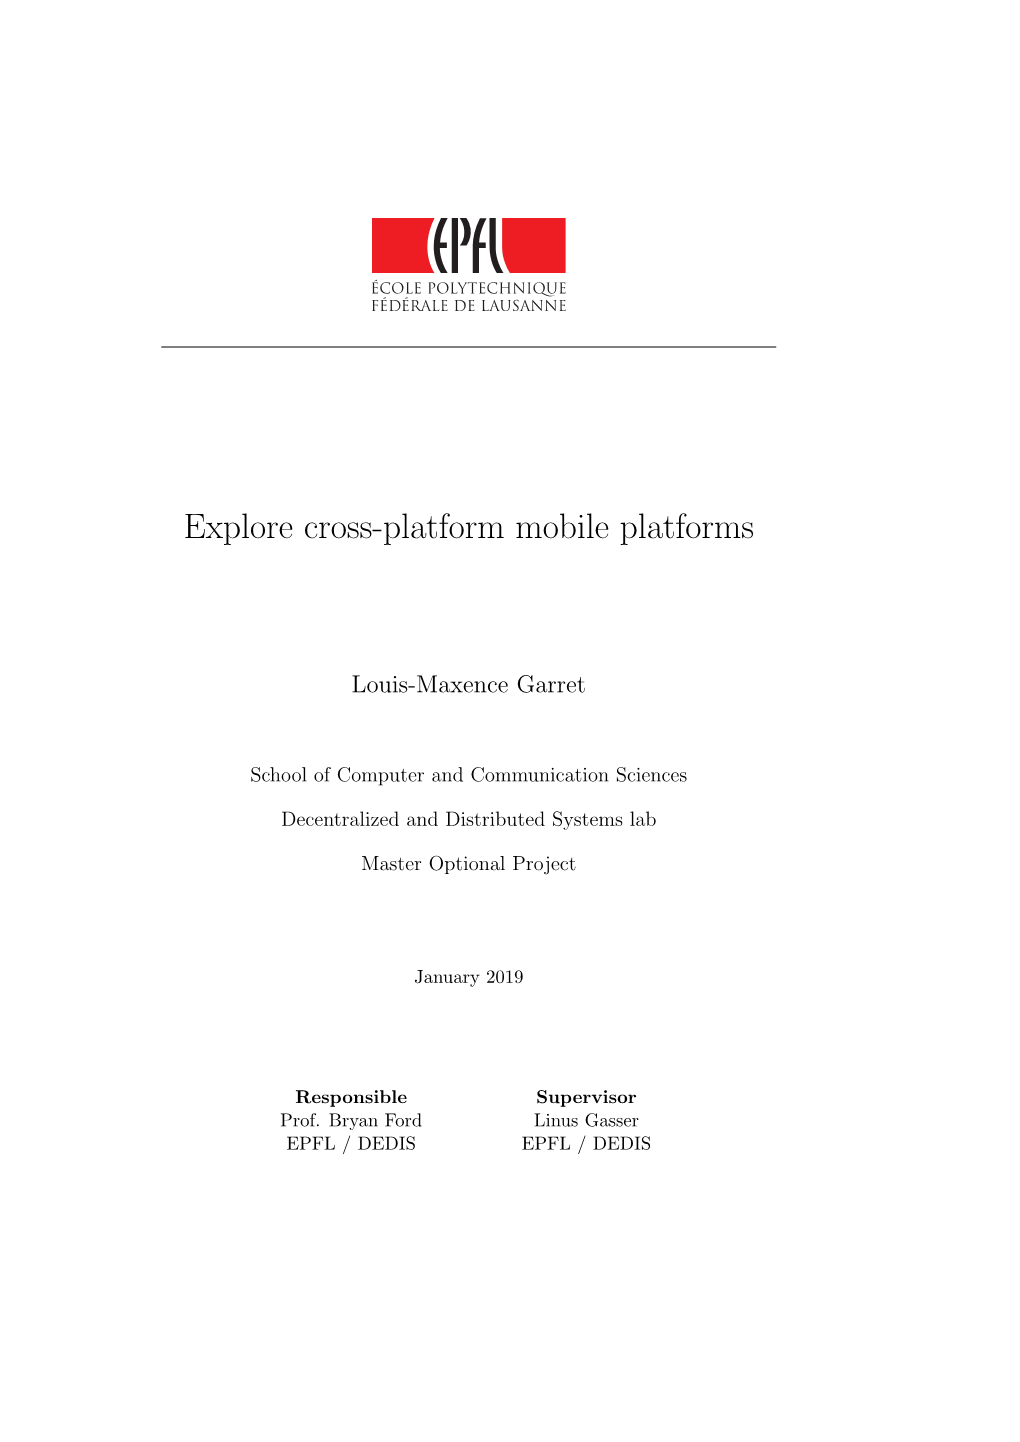 Explore Cross-Platform Mobile Platforms